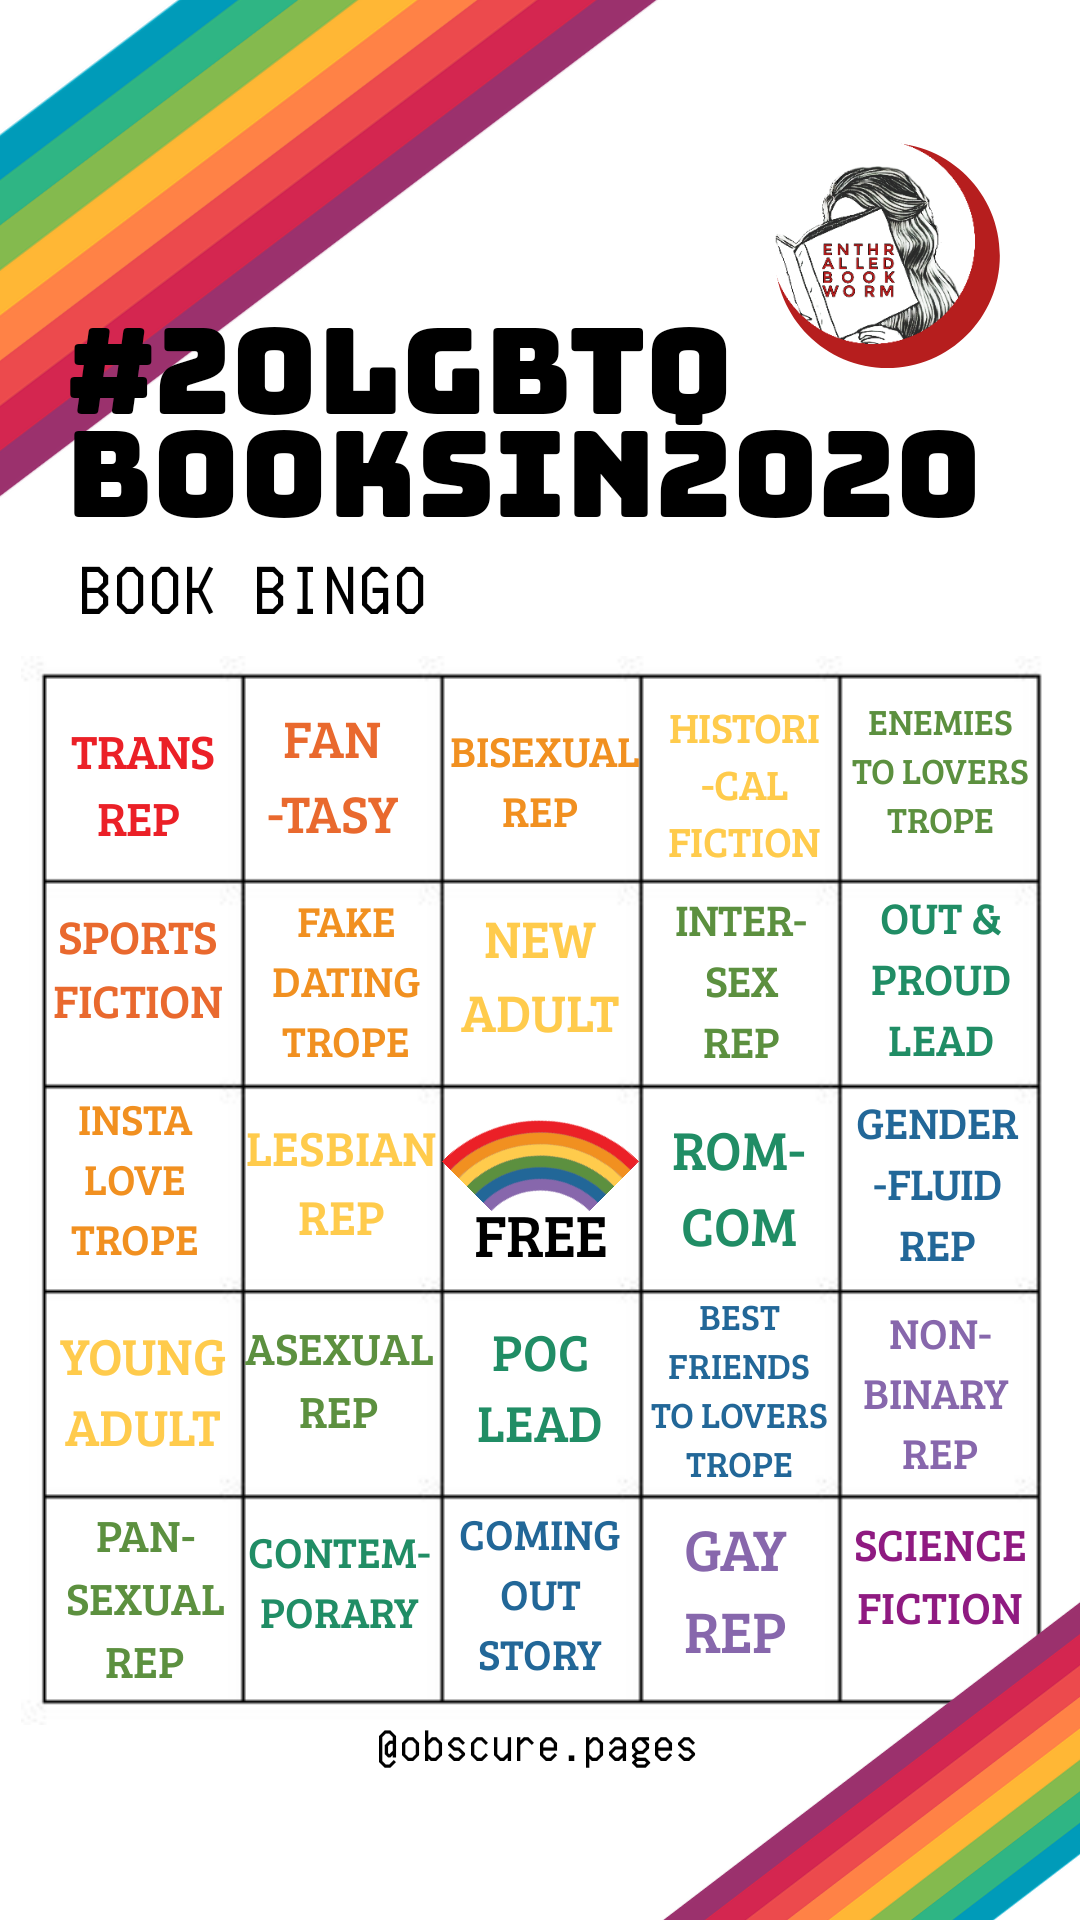 20 LGBTQ+ Books in 2020 Book Bingo